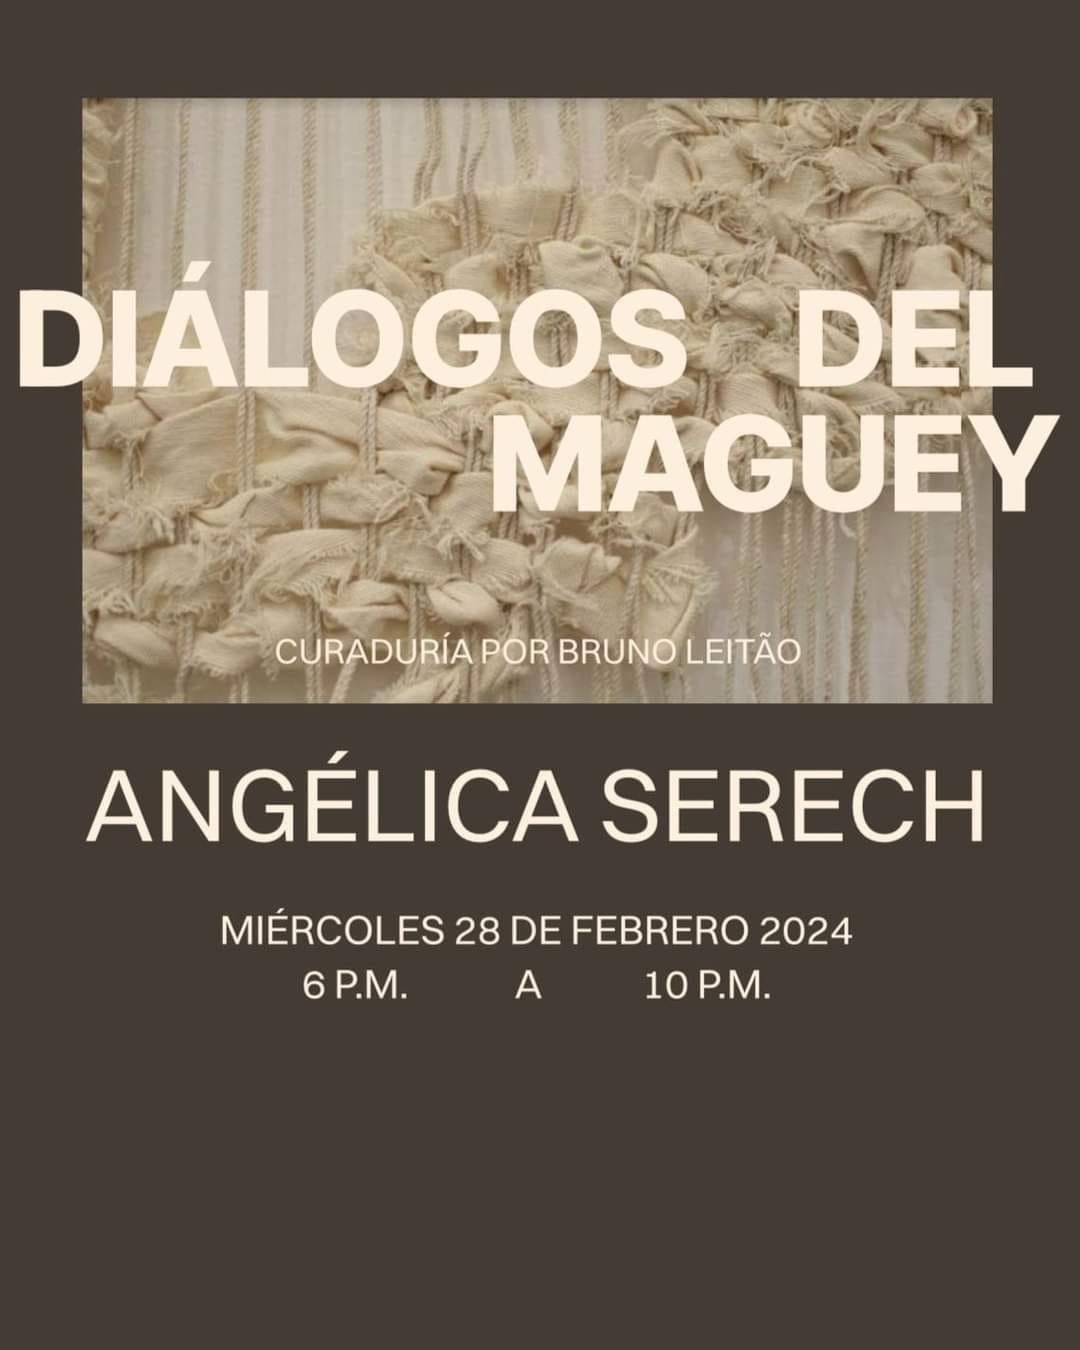 Diálogos del Maguey